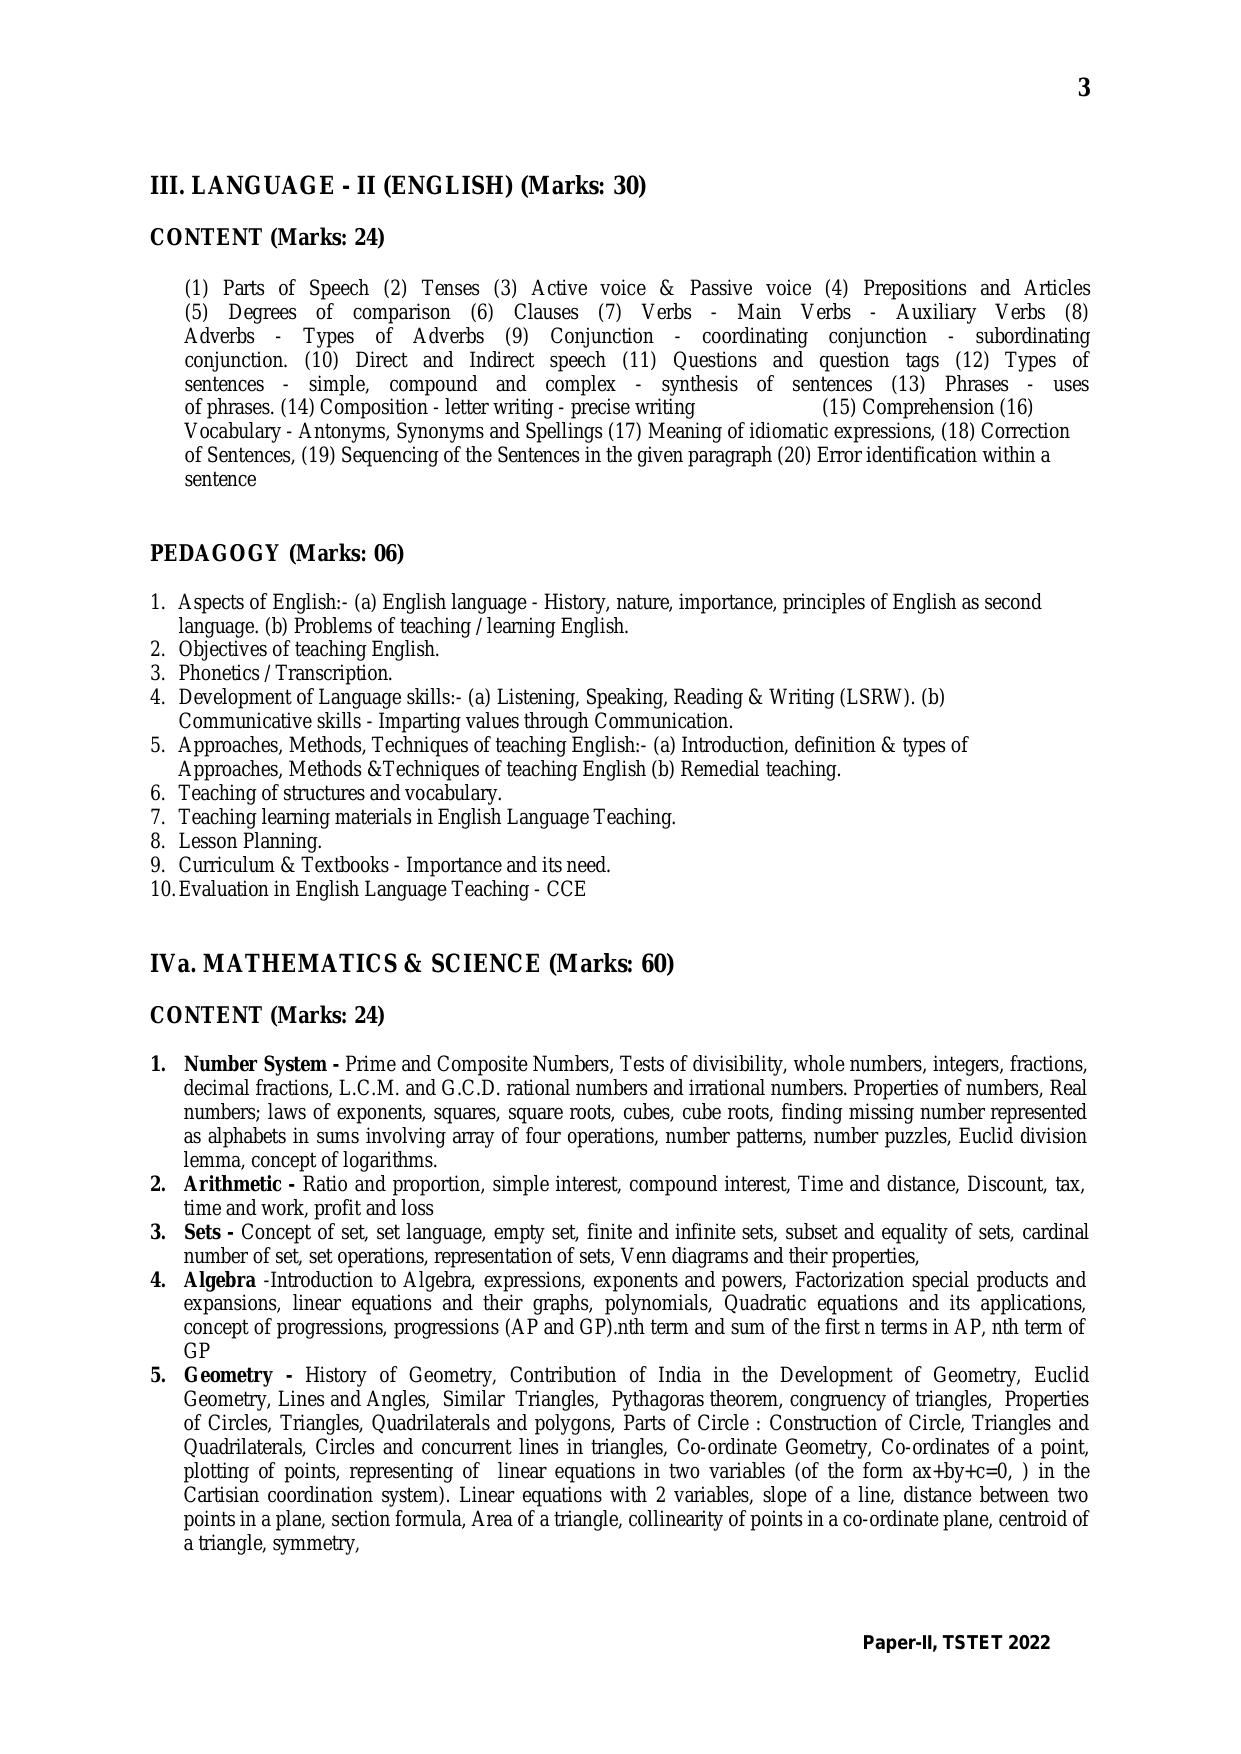 TS TET Syllabus for Paper 2 (Urdu) - Page 3